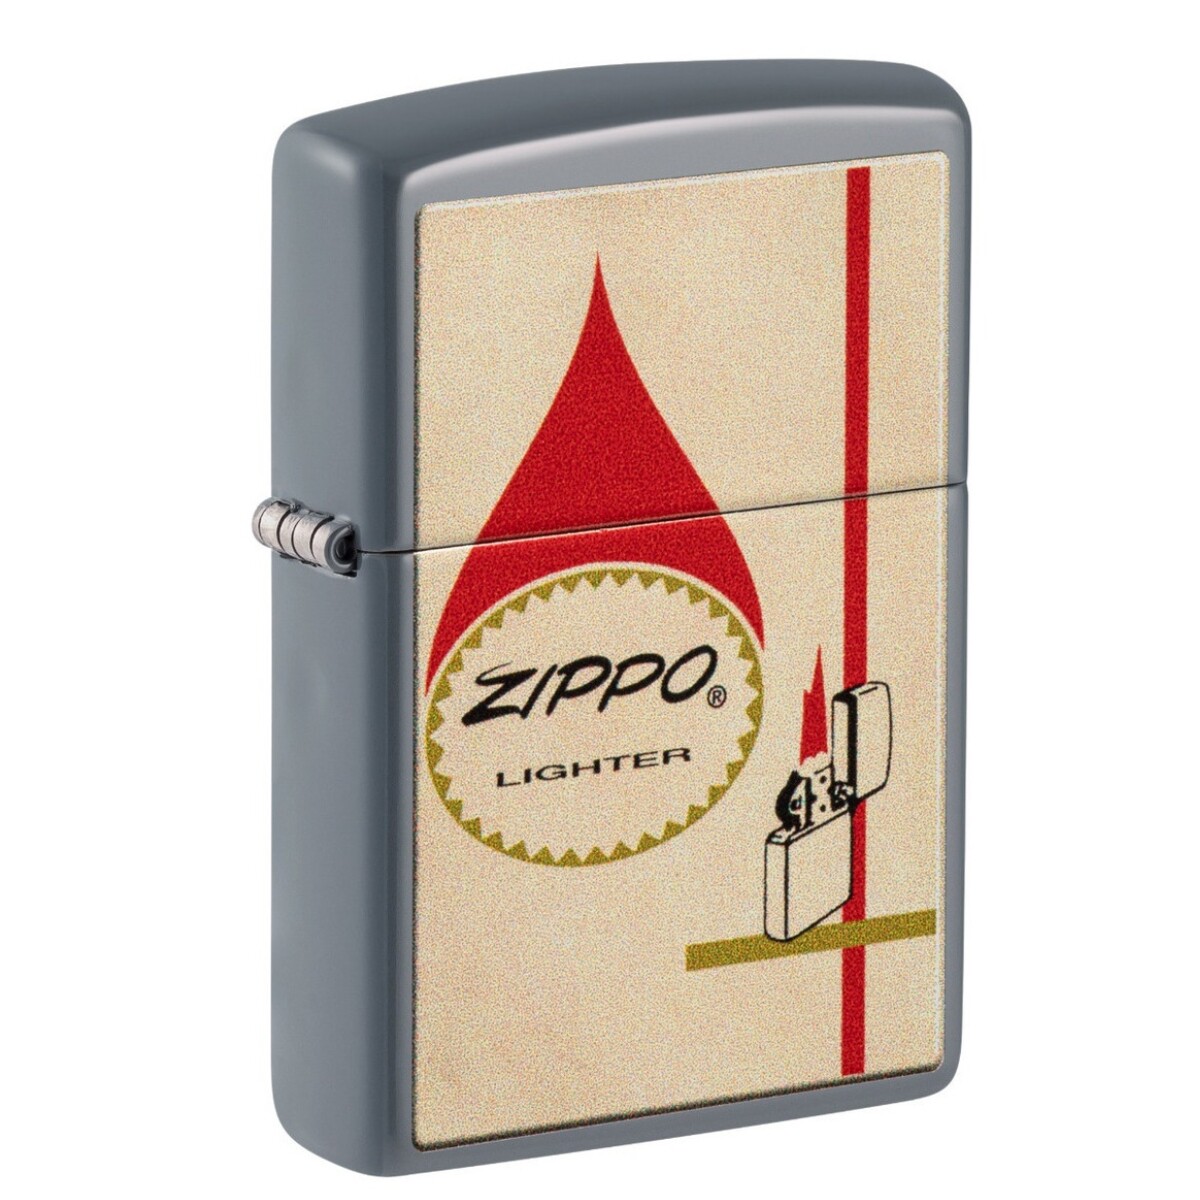 Encendedor Zippo Lighter Desing - 48496 